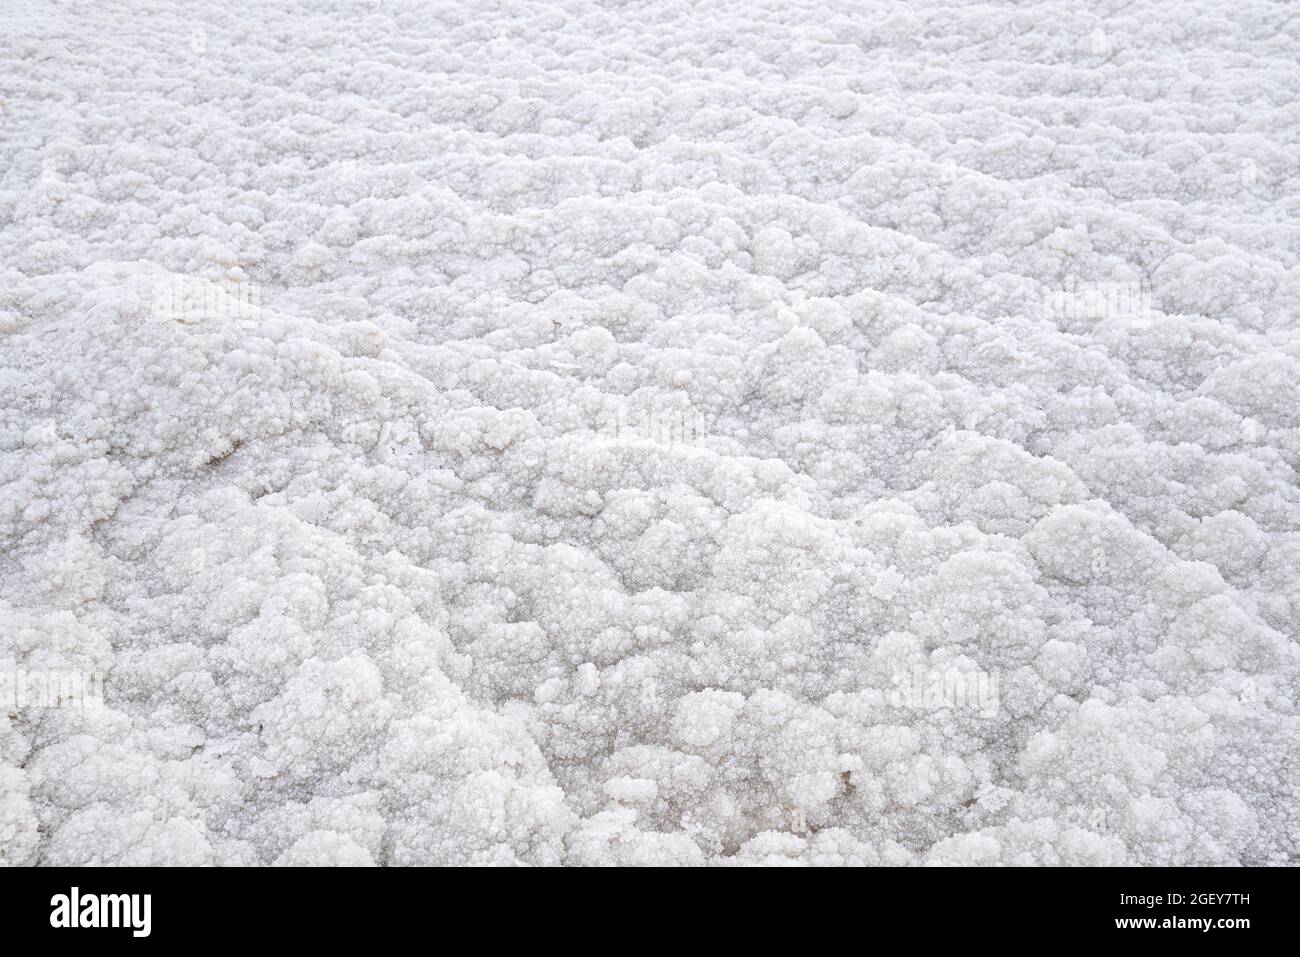 White crystalline salt closeup detail on Ein Bokek beach at Dead Sea - world most hypersaline lake. Stock Photo